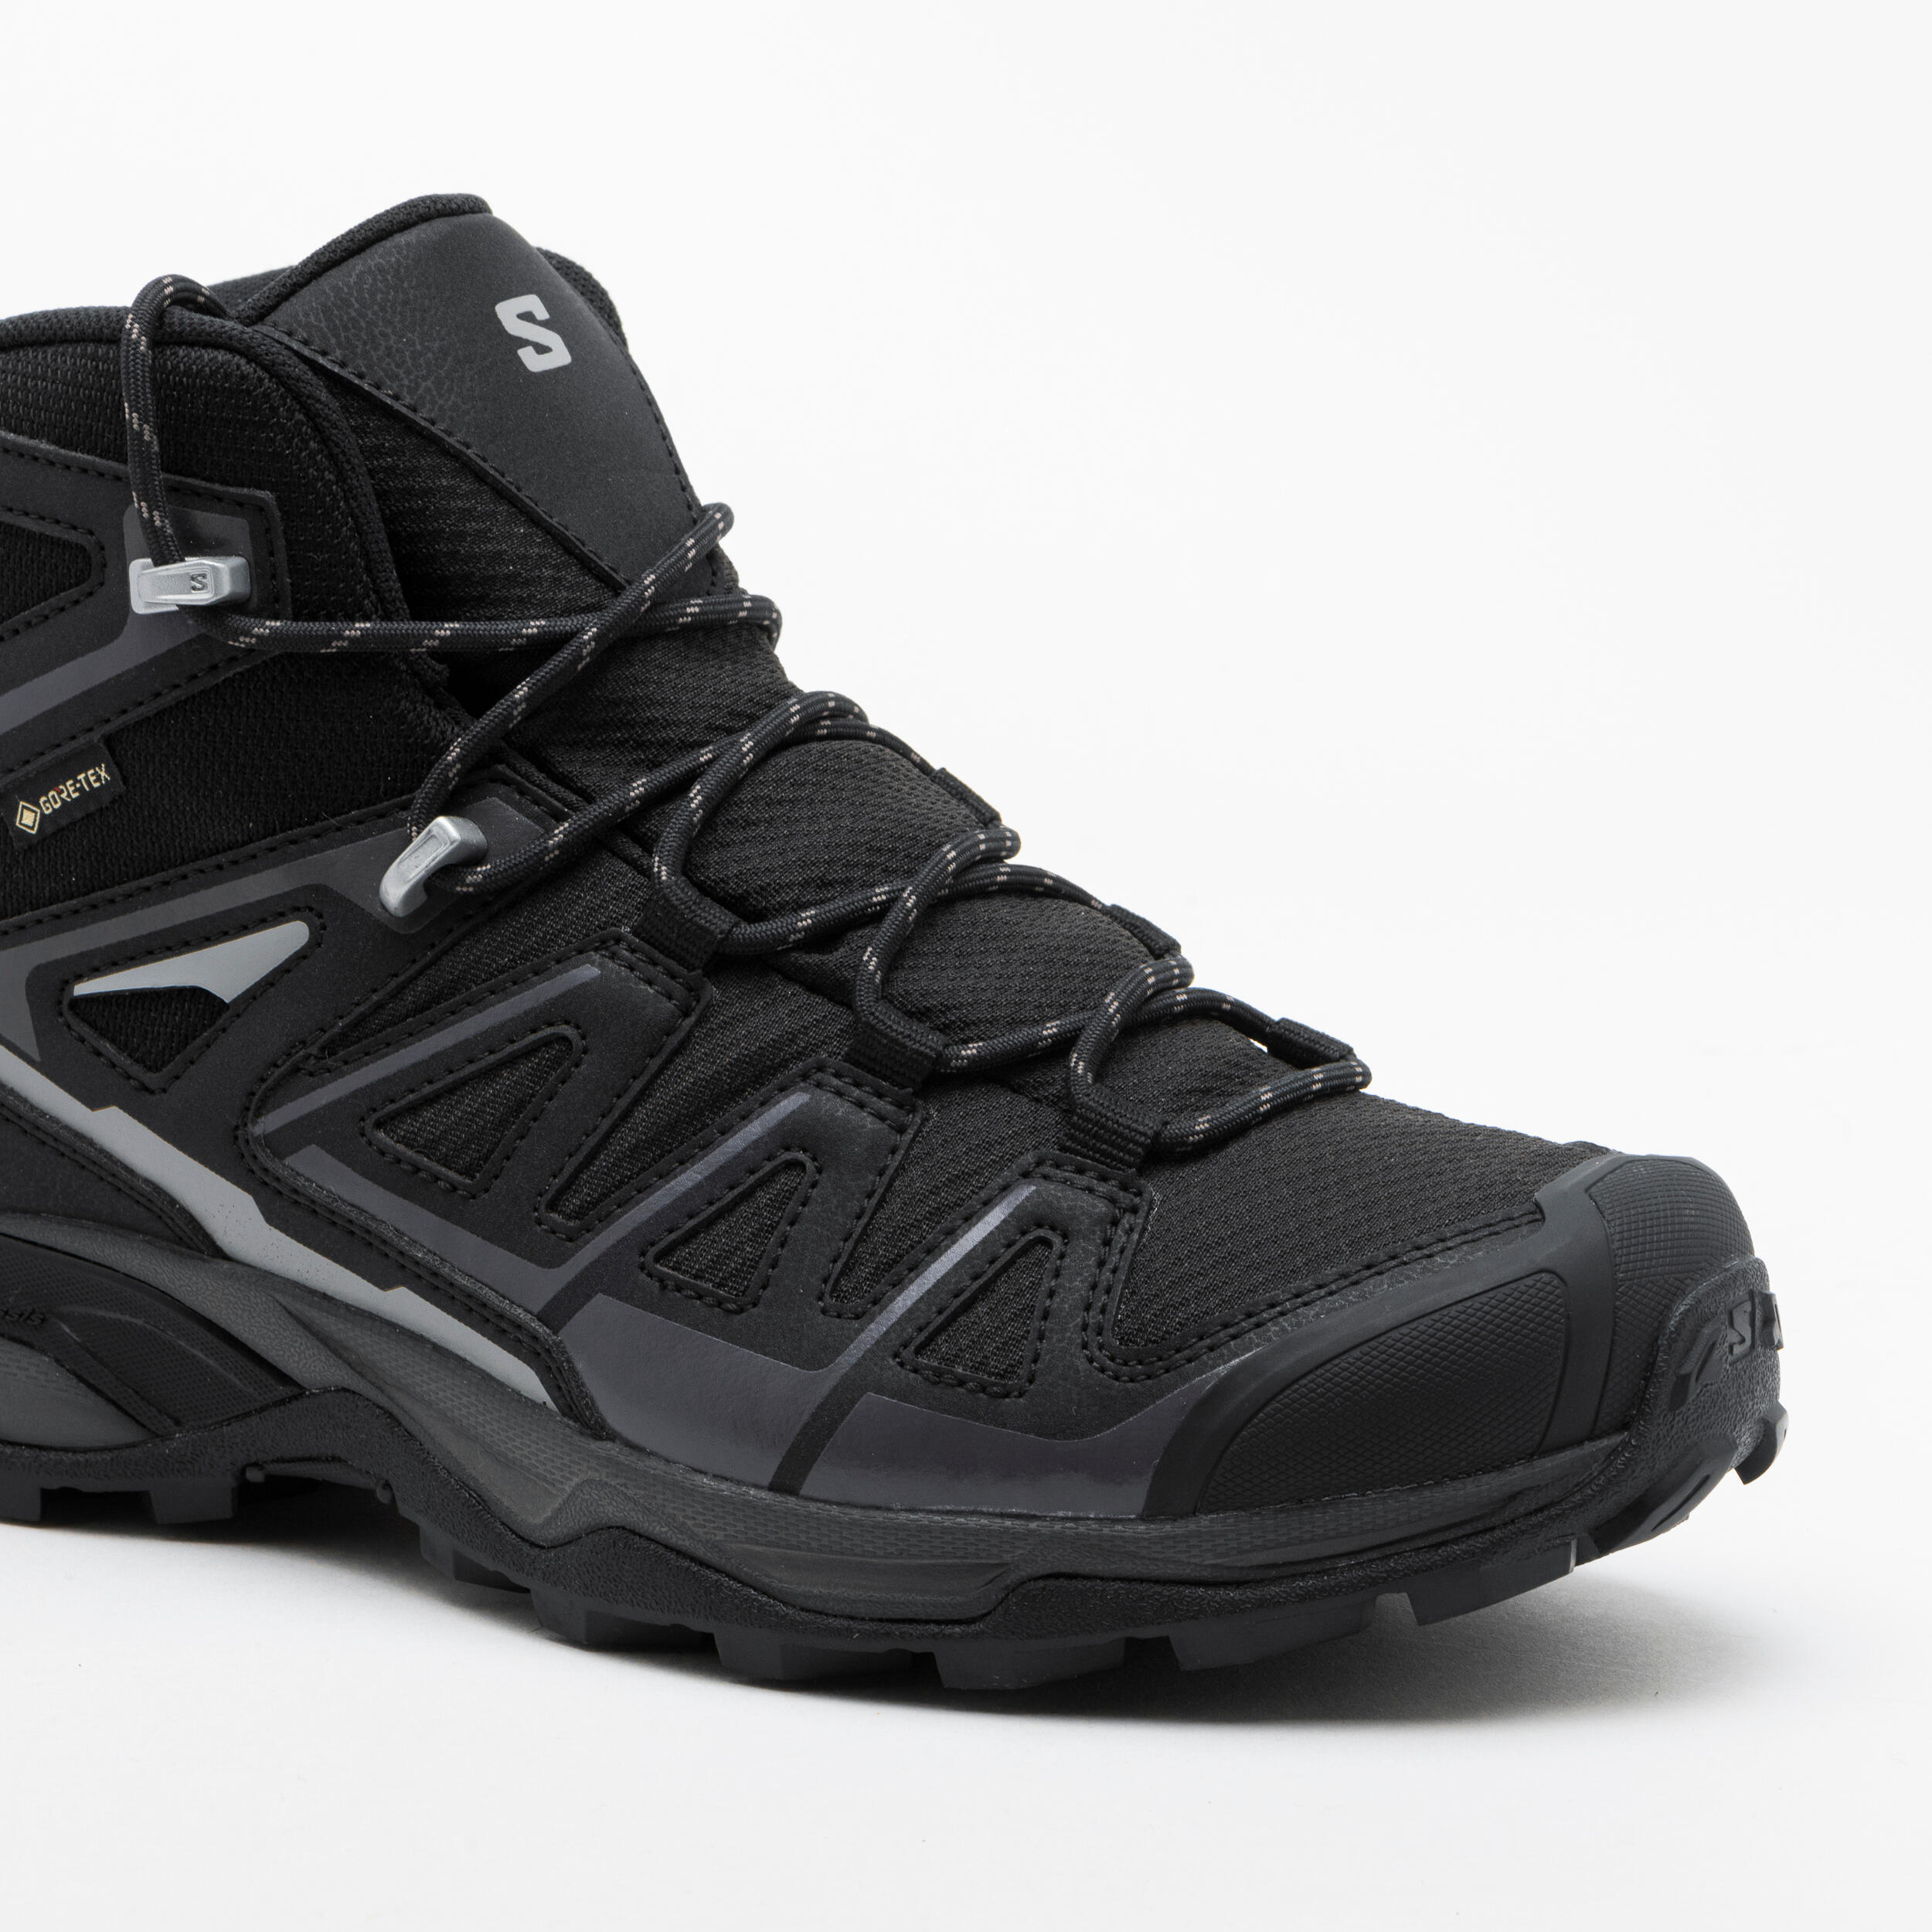 Men’s Waterproof Hiking Boots - Salomon X Ultra Pioneer 2 GTX 4/5